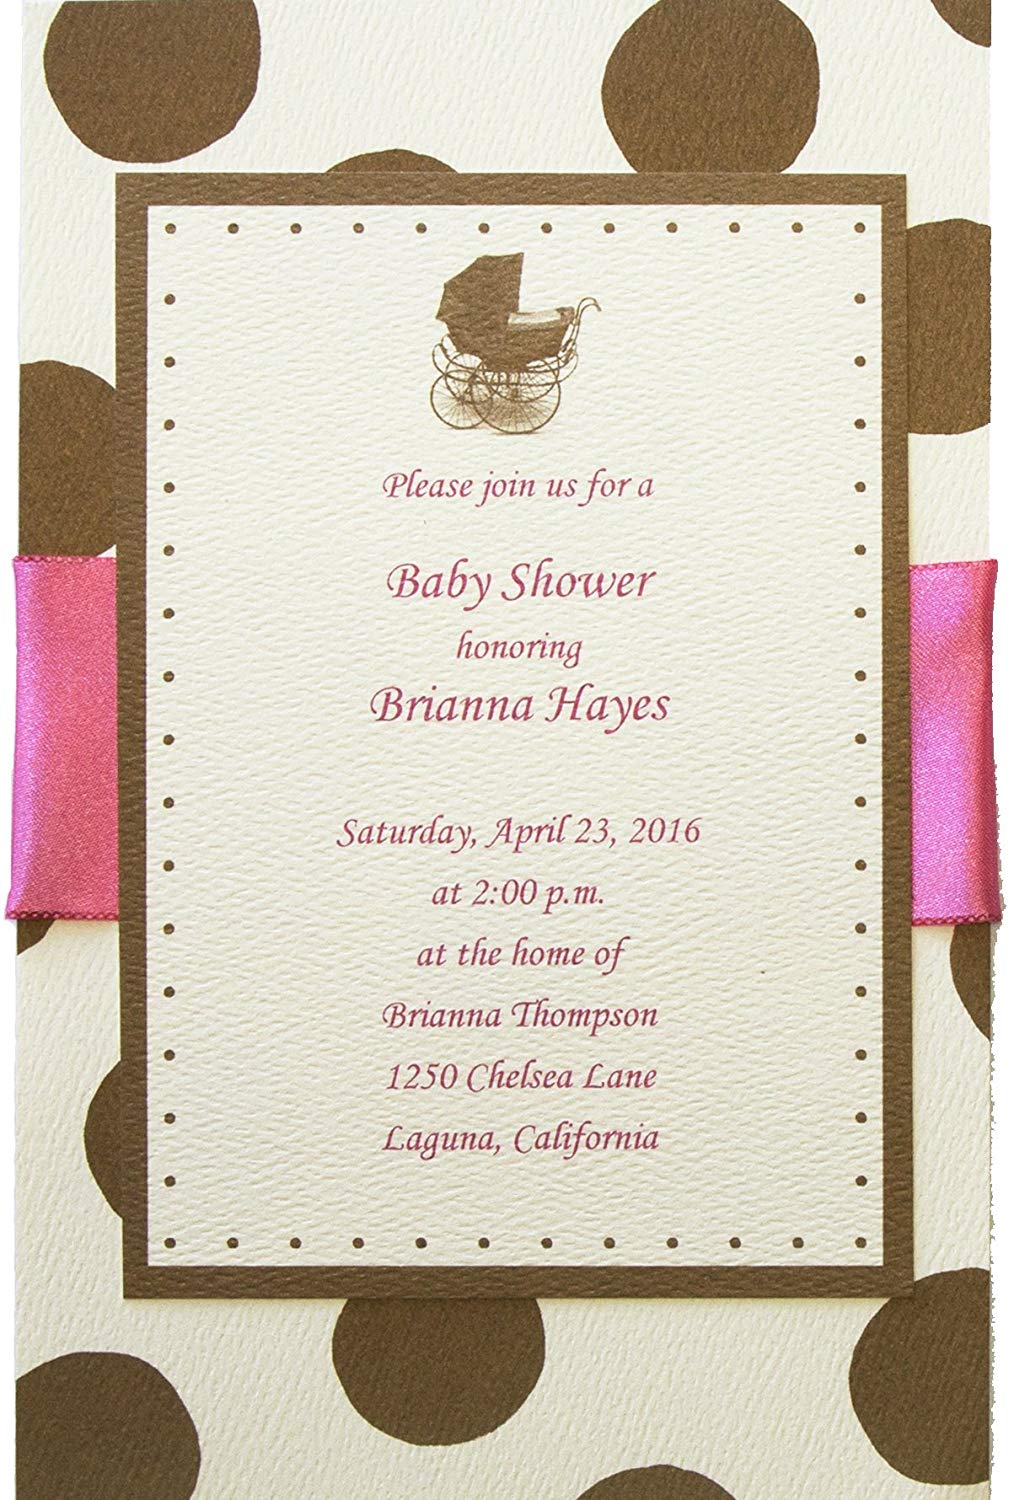 Full Size of Baby Shower:baby Shower Invitations Nursery For Girls Baby Shower Ideas For Girls Baby Girl Themes For Baby Shower Pinterest Nursery Ideas